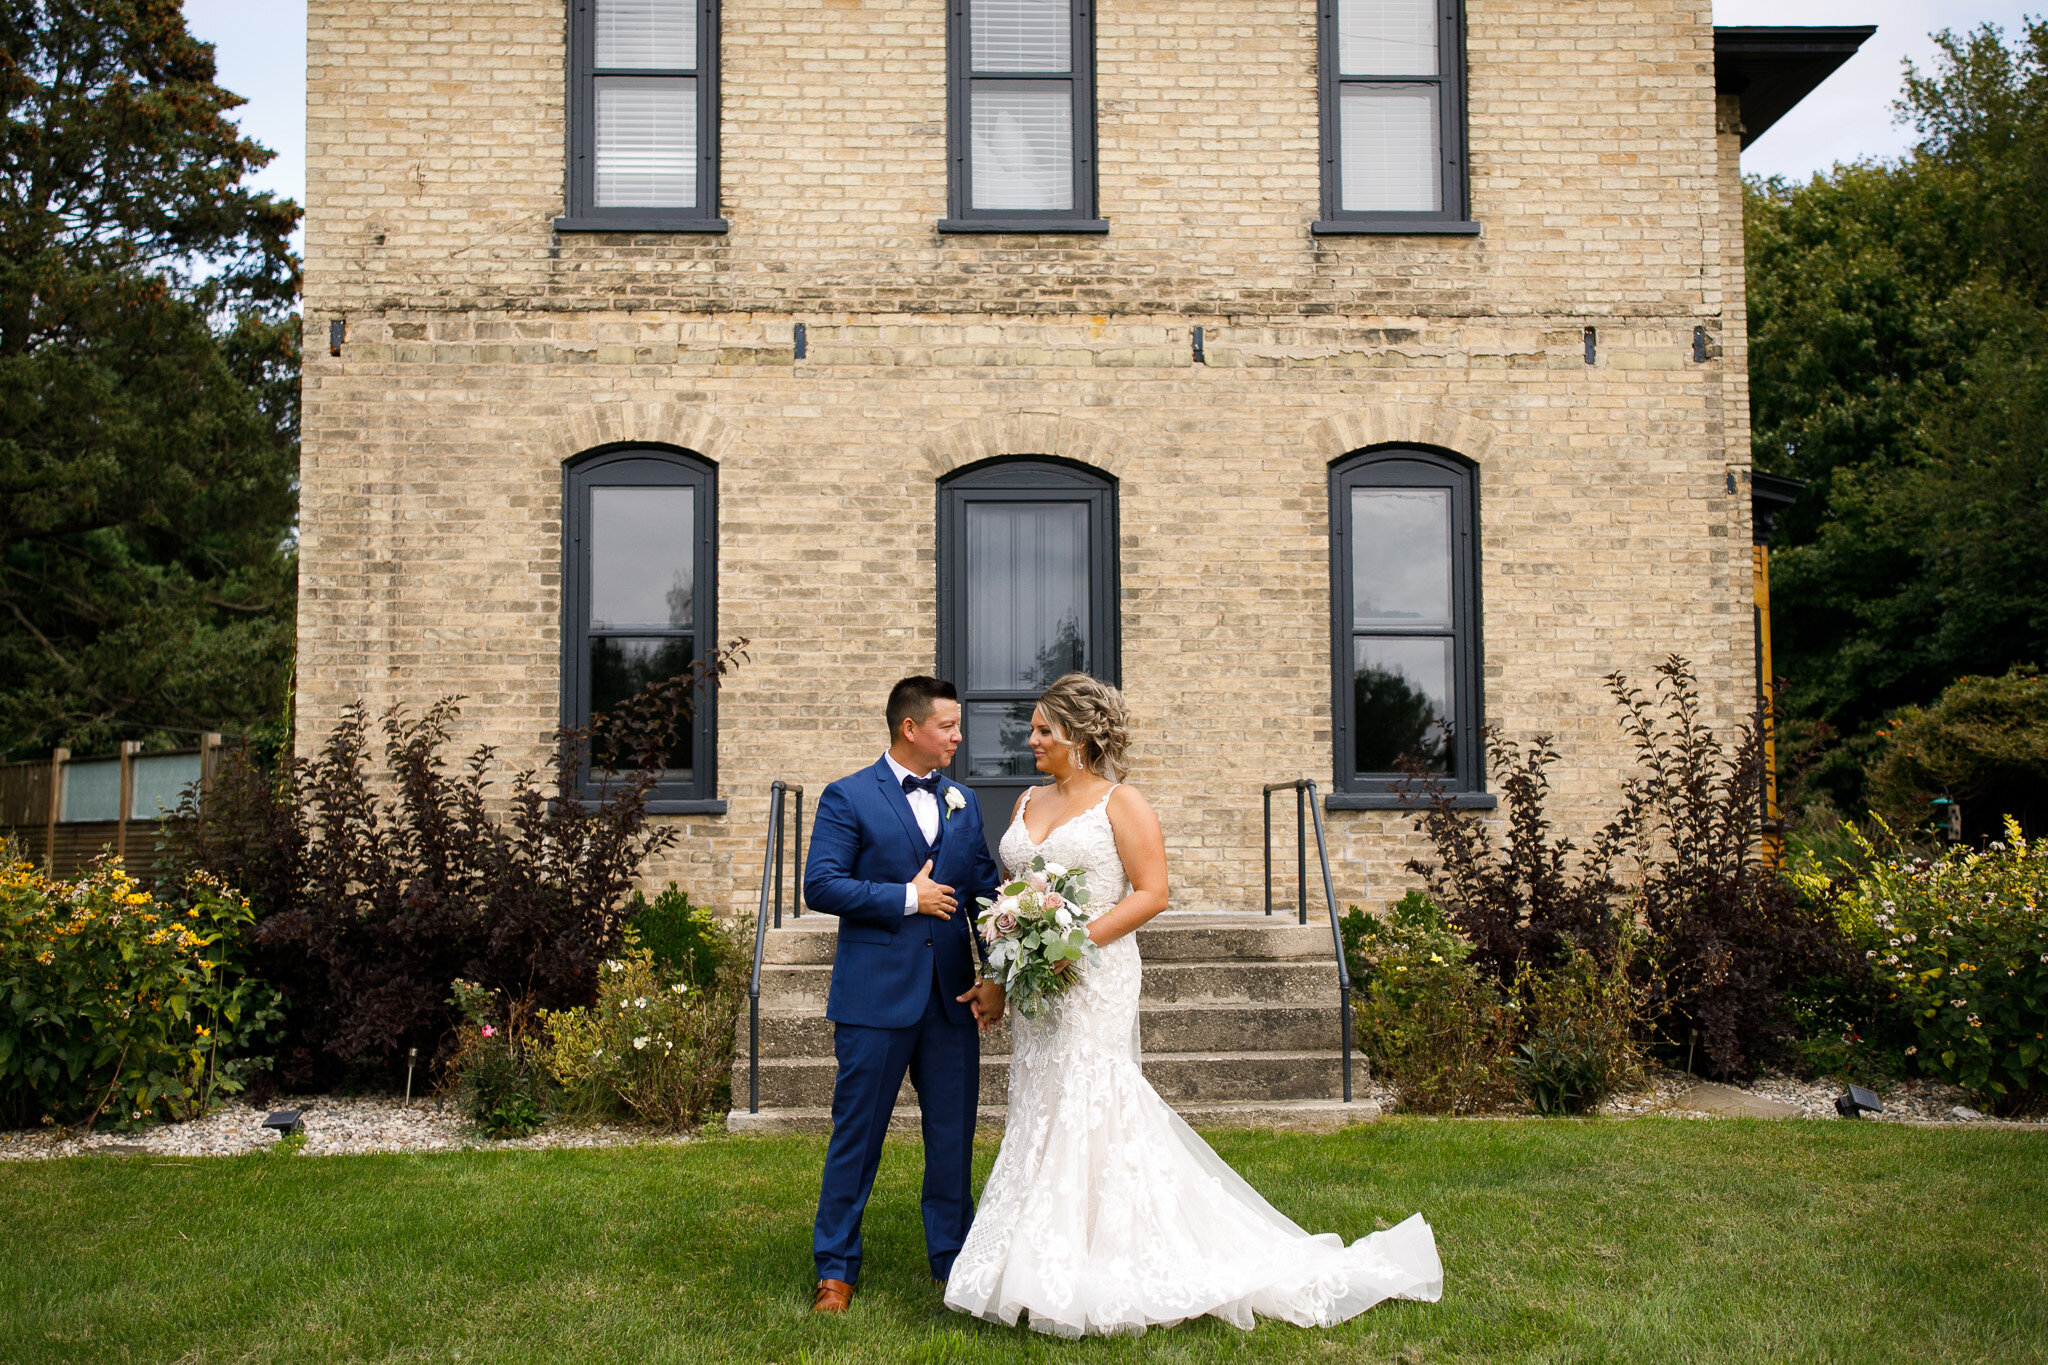 Pinnacle Center Wedding - Jillian and Rodrigo Wedding - Grand Rapids Wedding Photographer - West Michigan Wedding Photographer - West Michigan Wedding - Farmhouse Wedding - J Darling Photo074.jpg